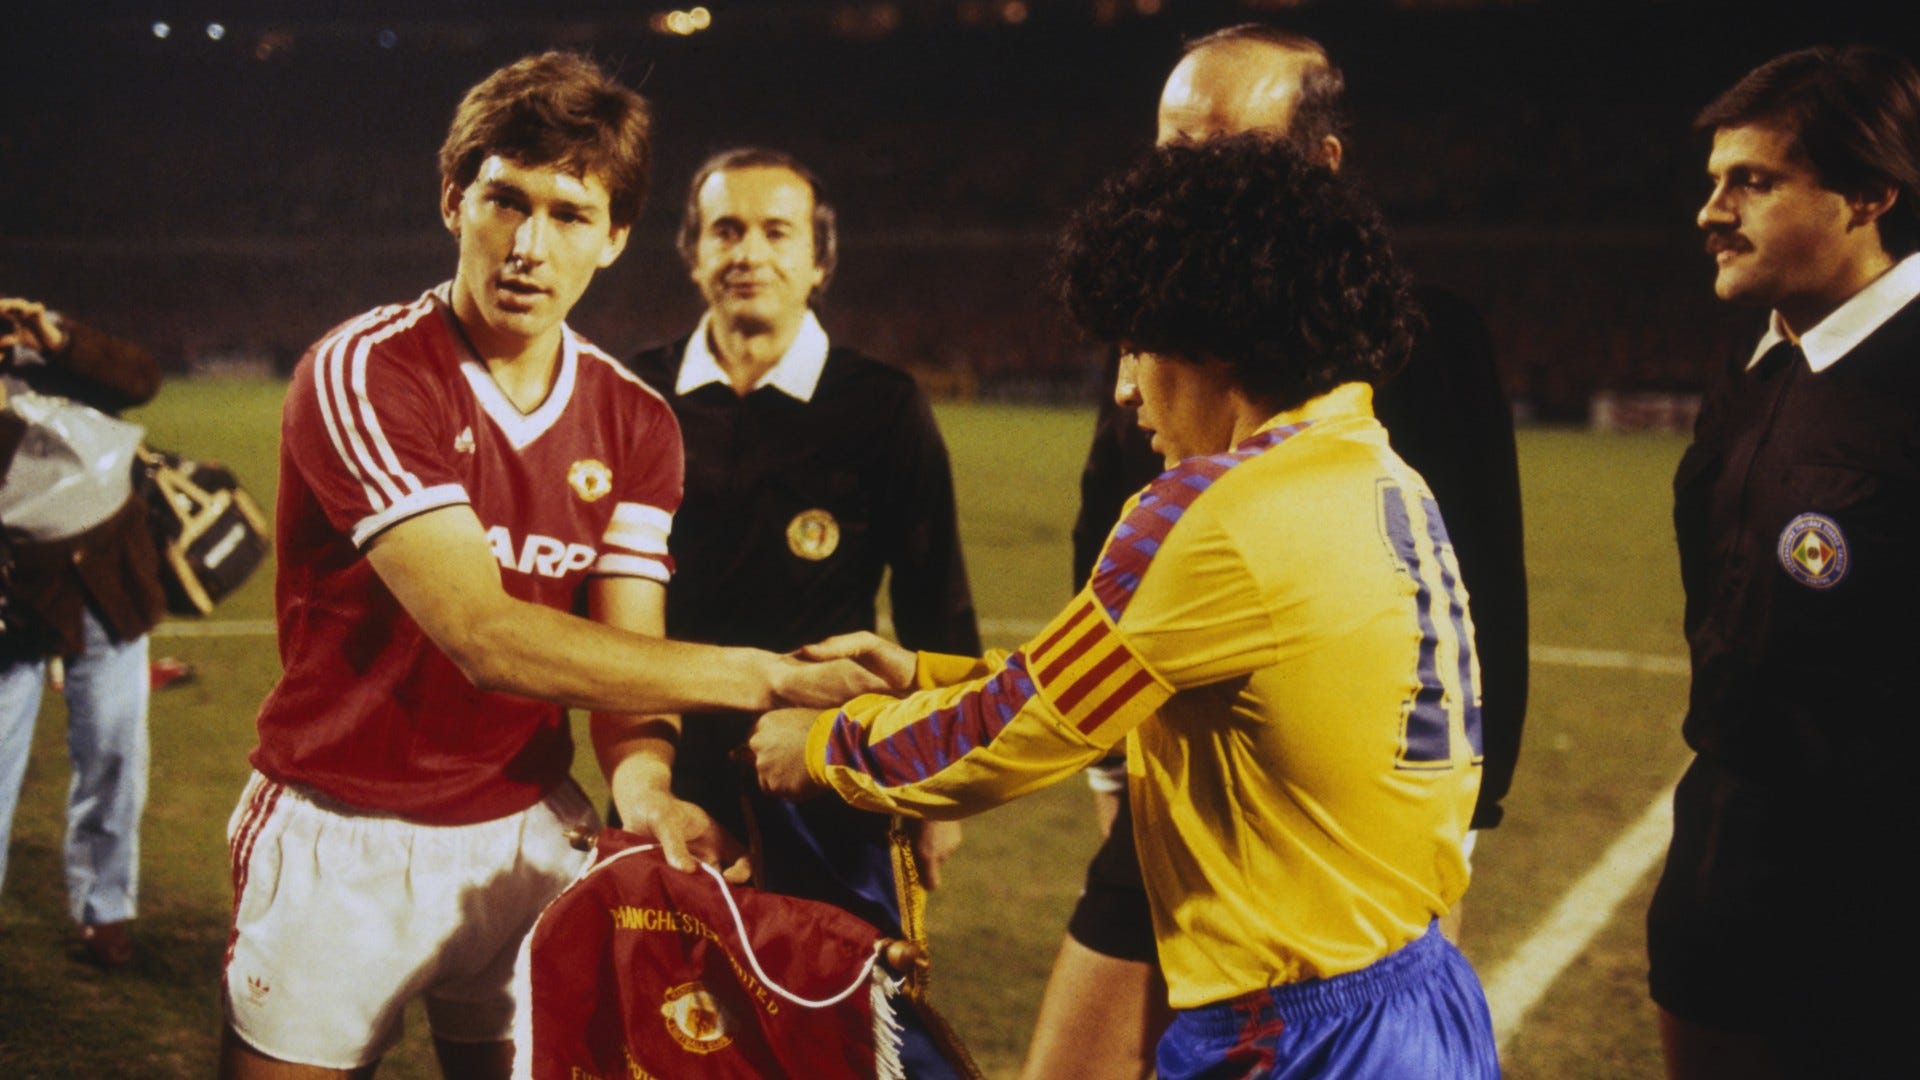 Bryan-Robson-Maradona-Man-Utd-Barca-1984-tii